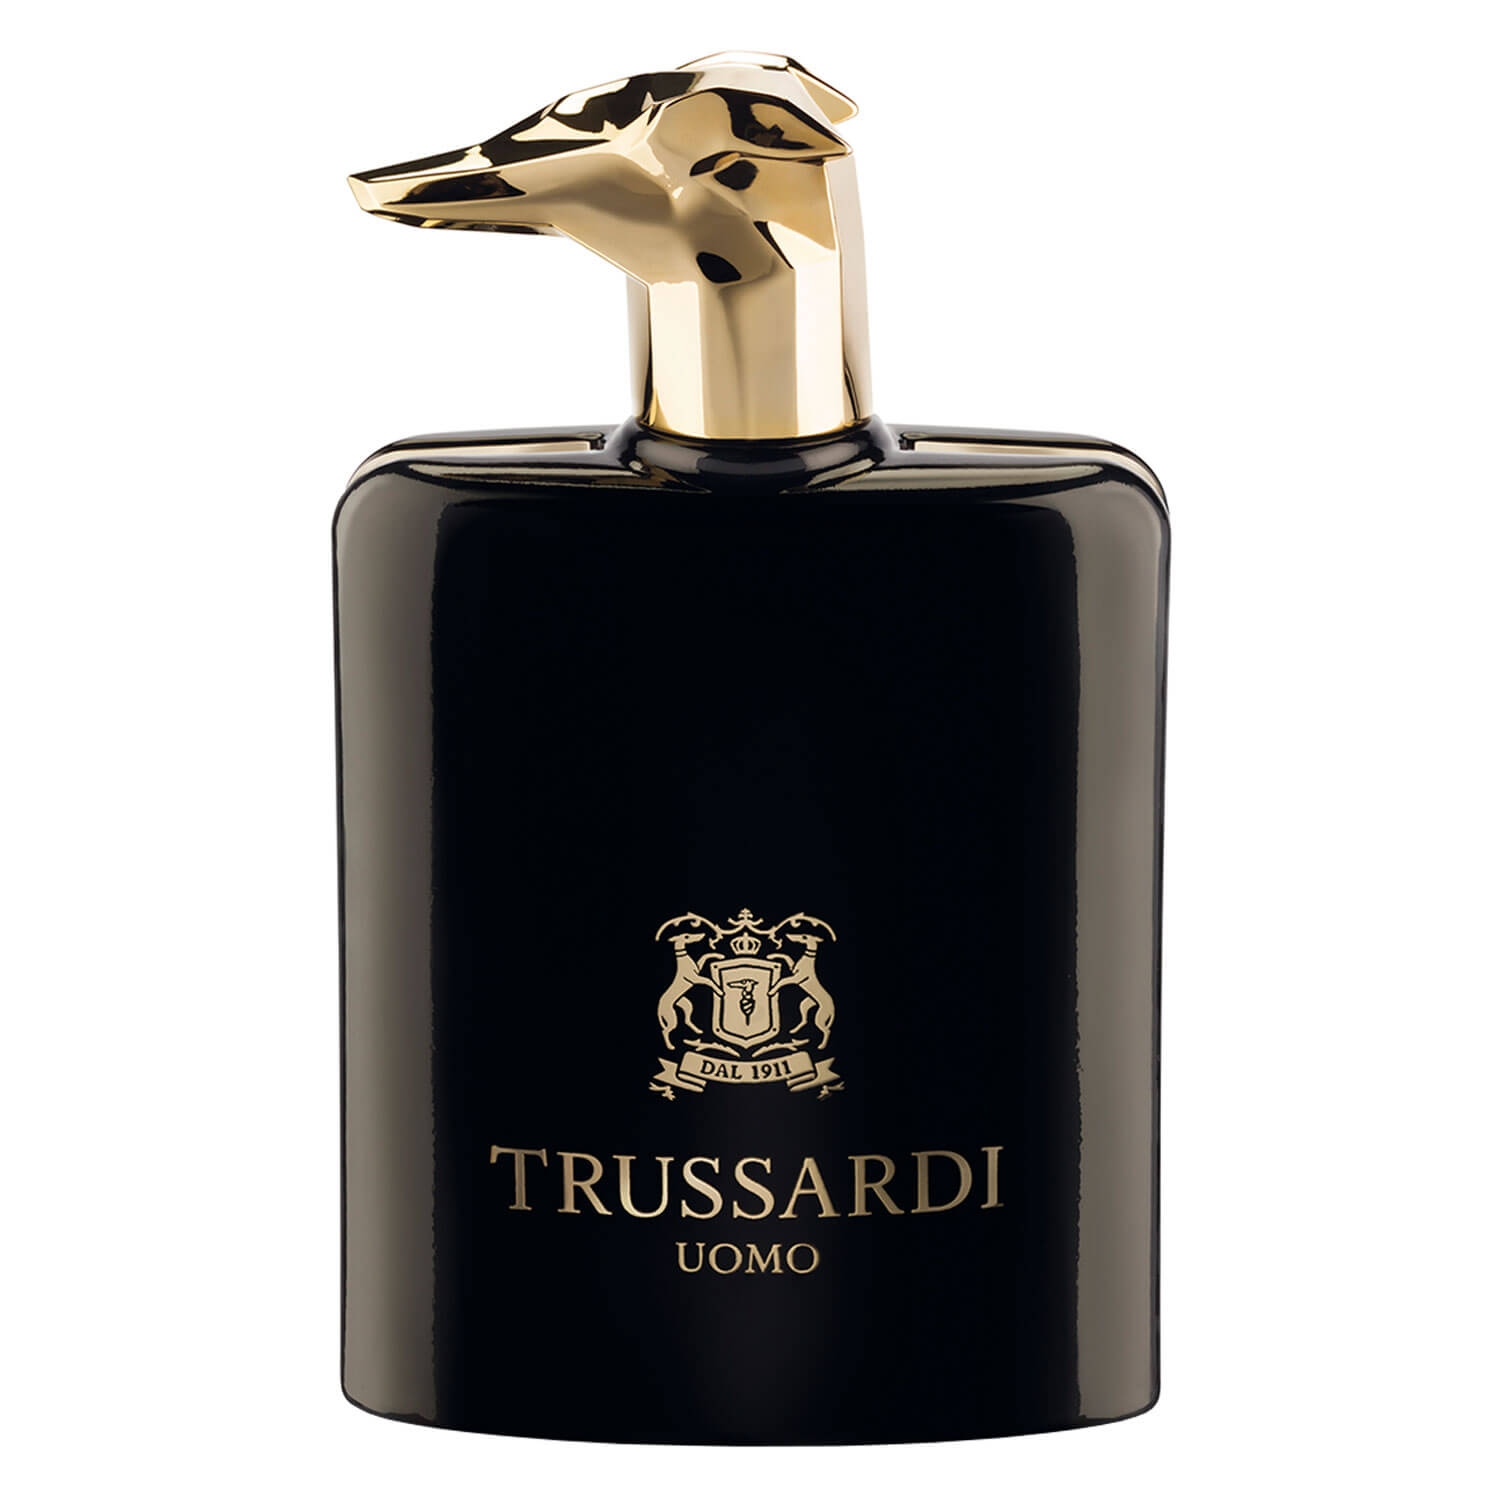 Produktbild von Trussardi Uomo - Levriero Collection Eau de Parfum